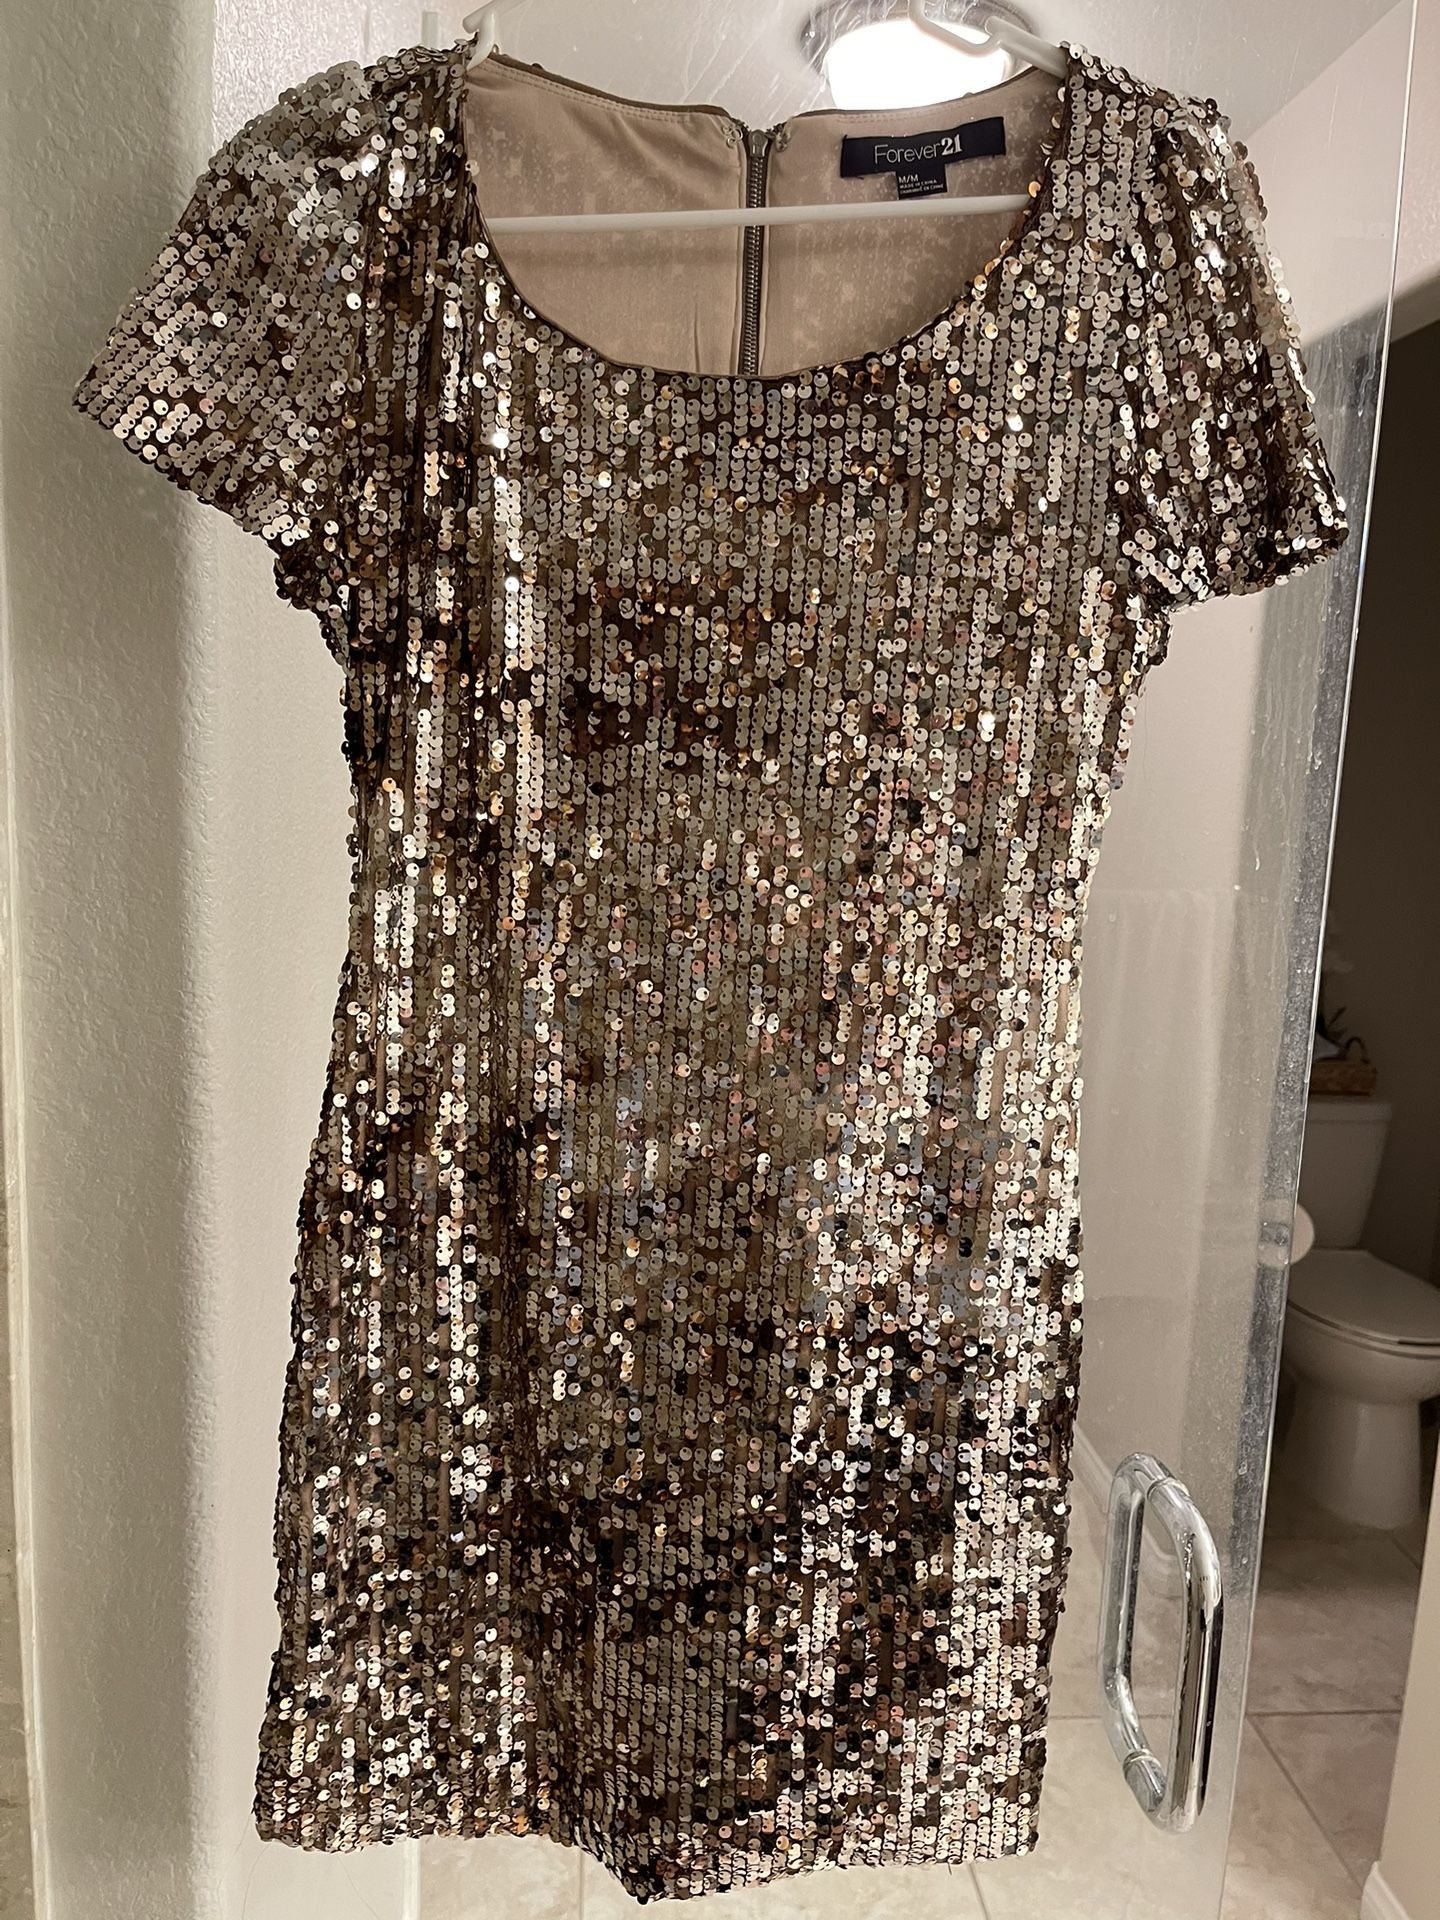 Sequin Gold/bronze Dress